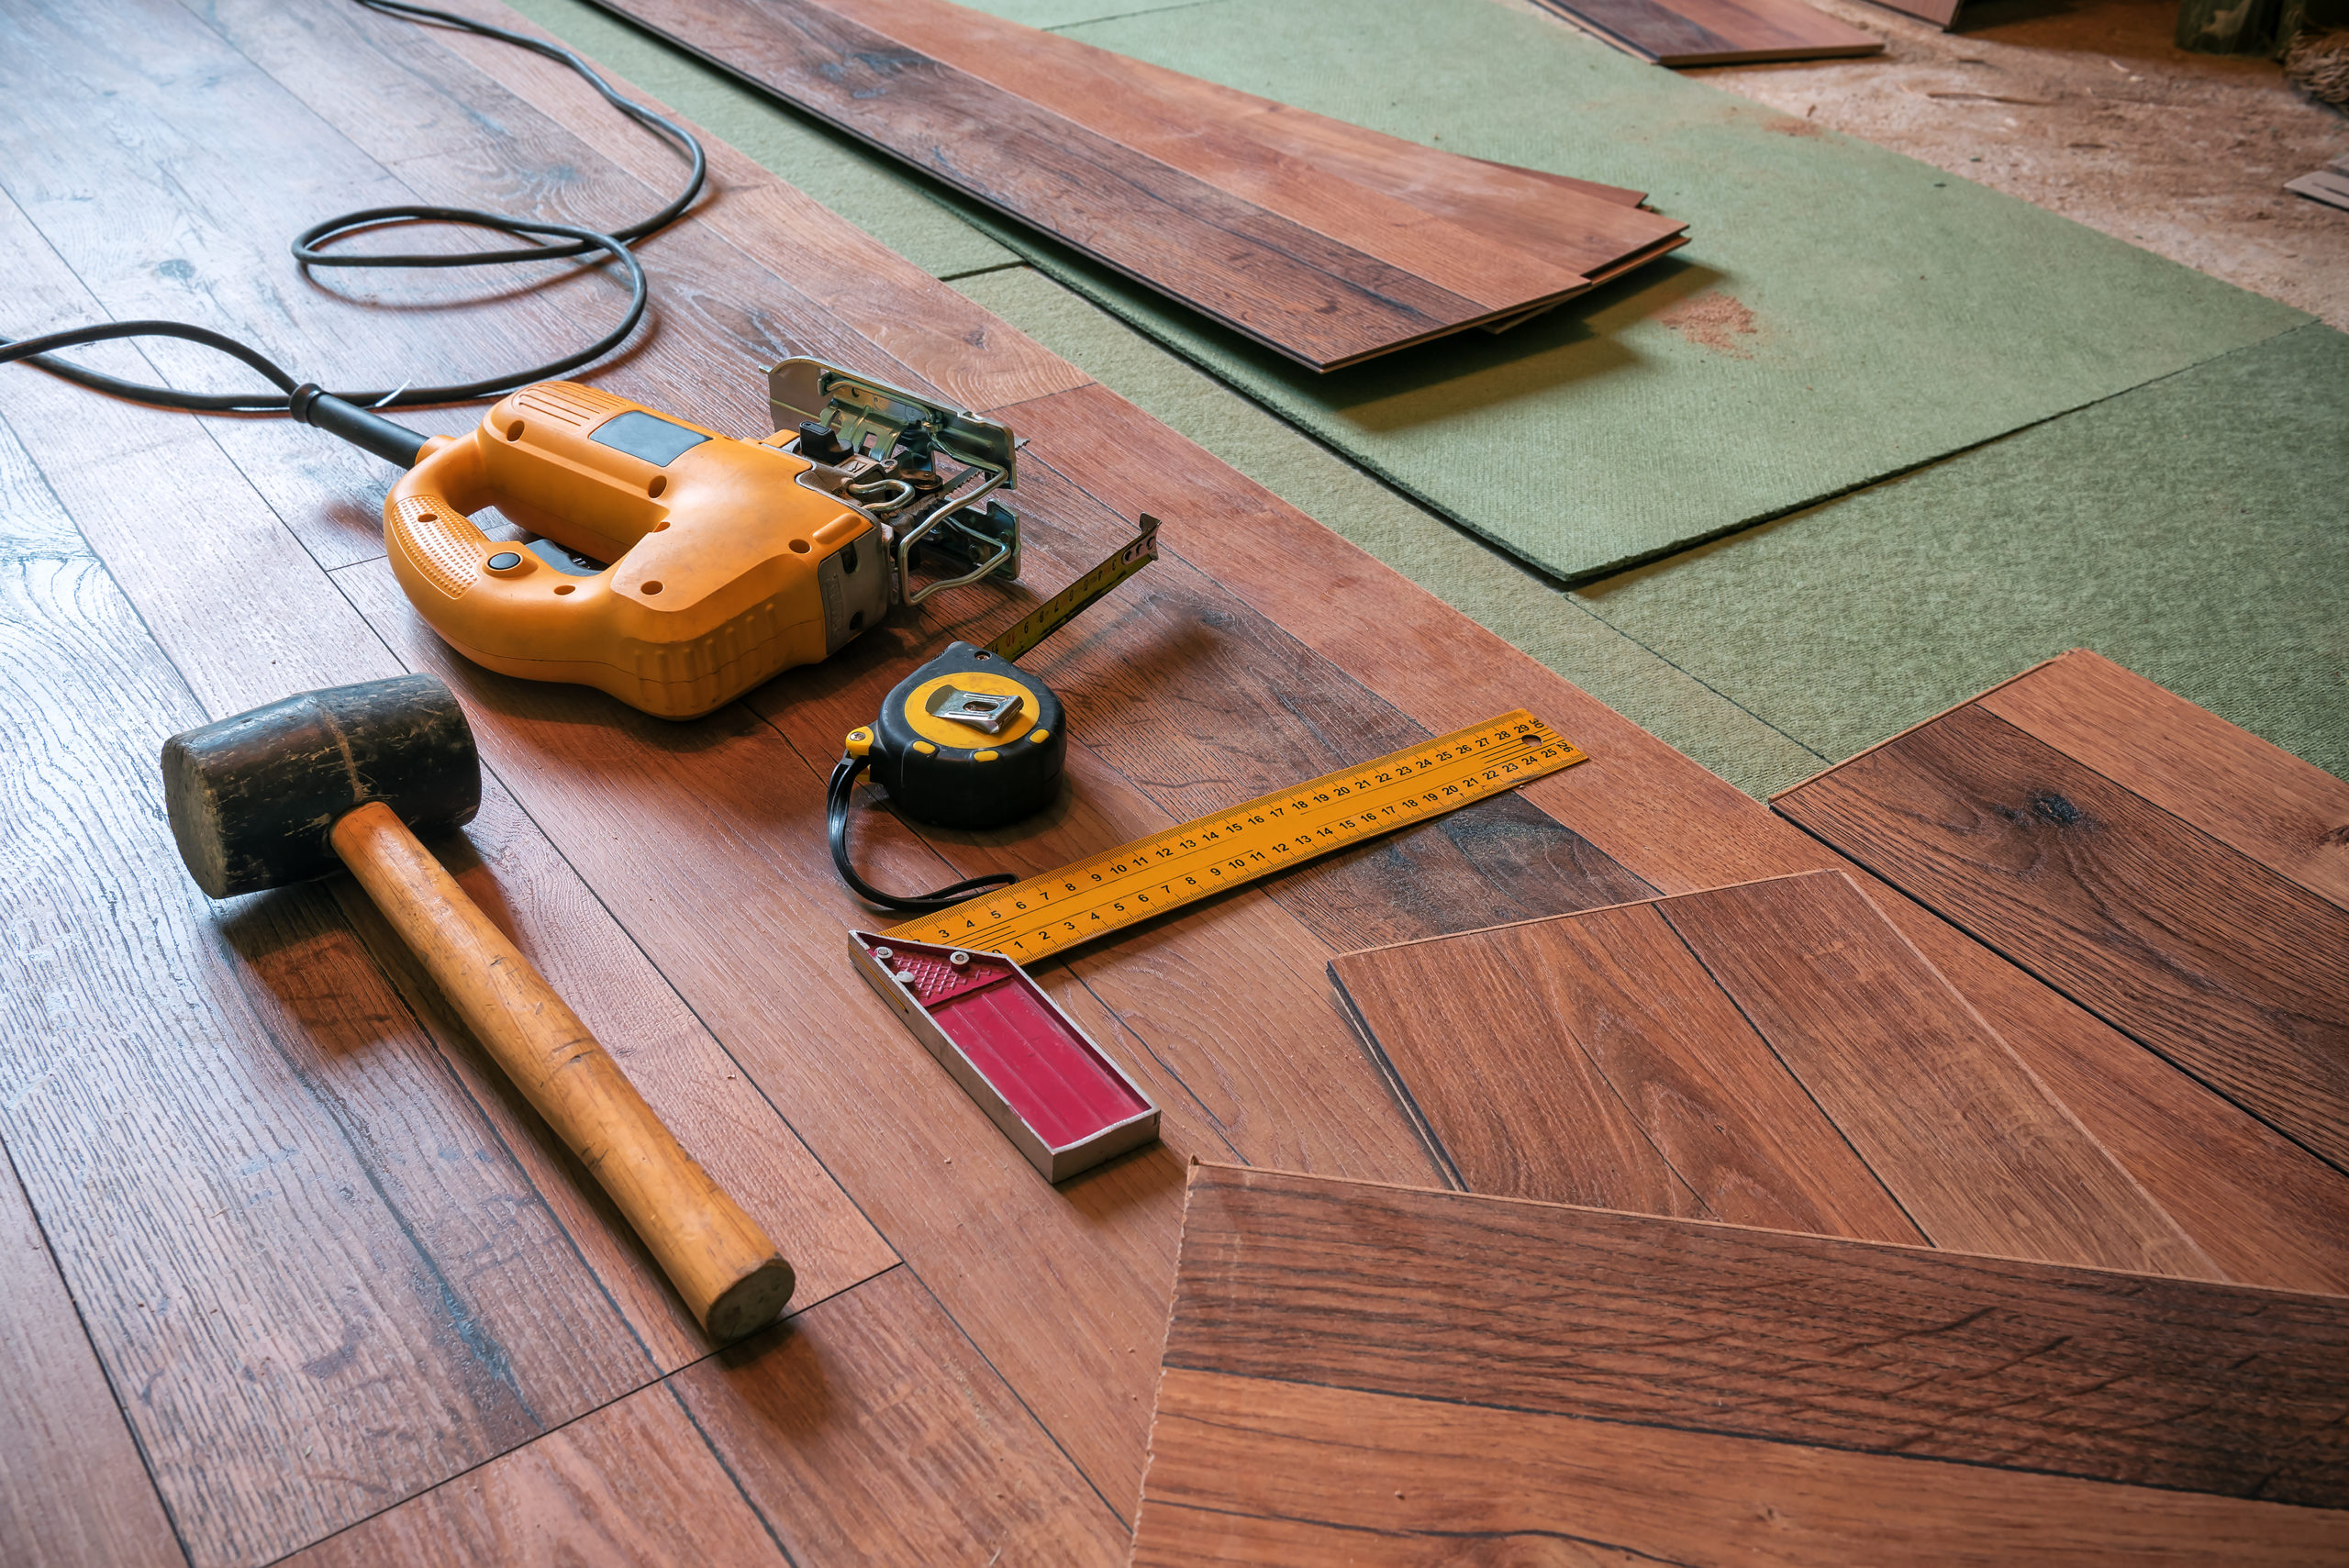 Floor repairs and maintenance